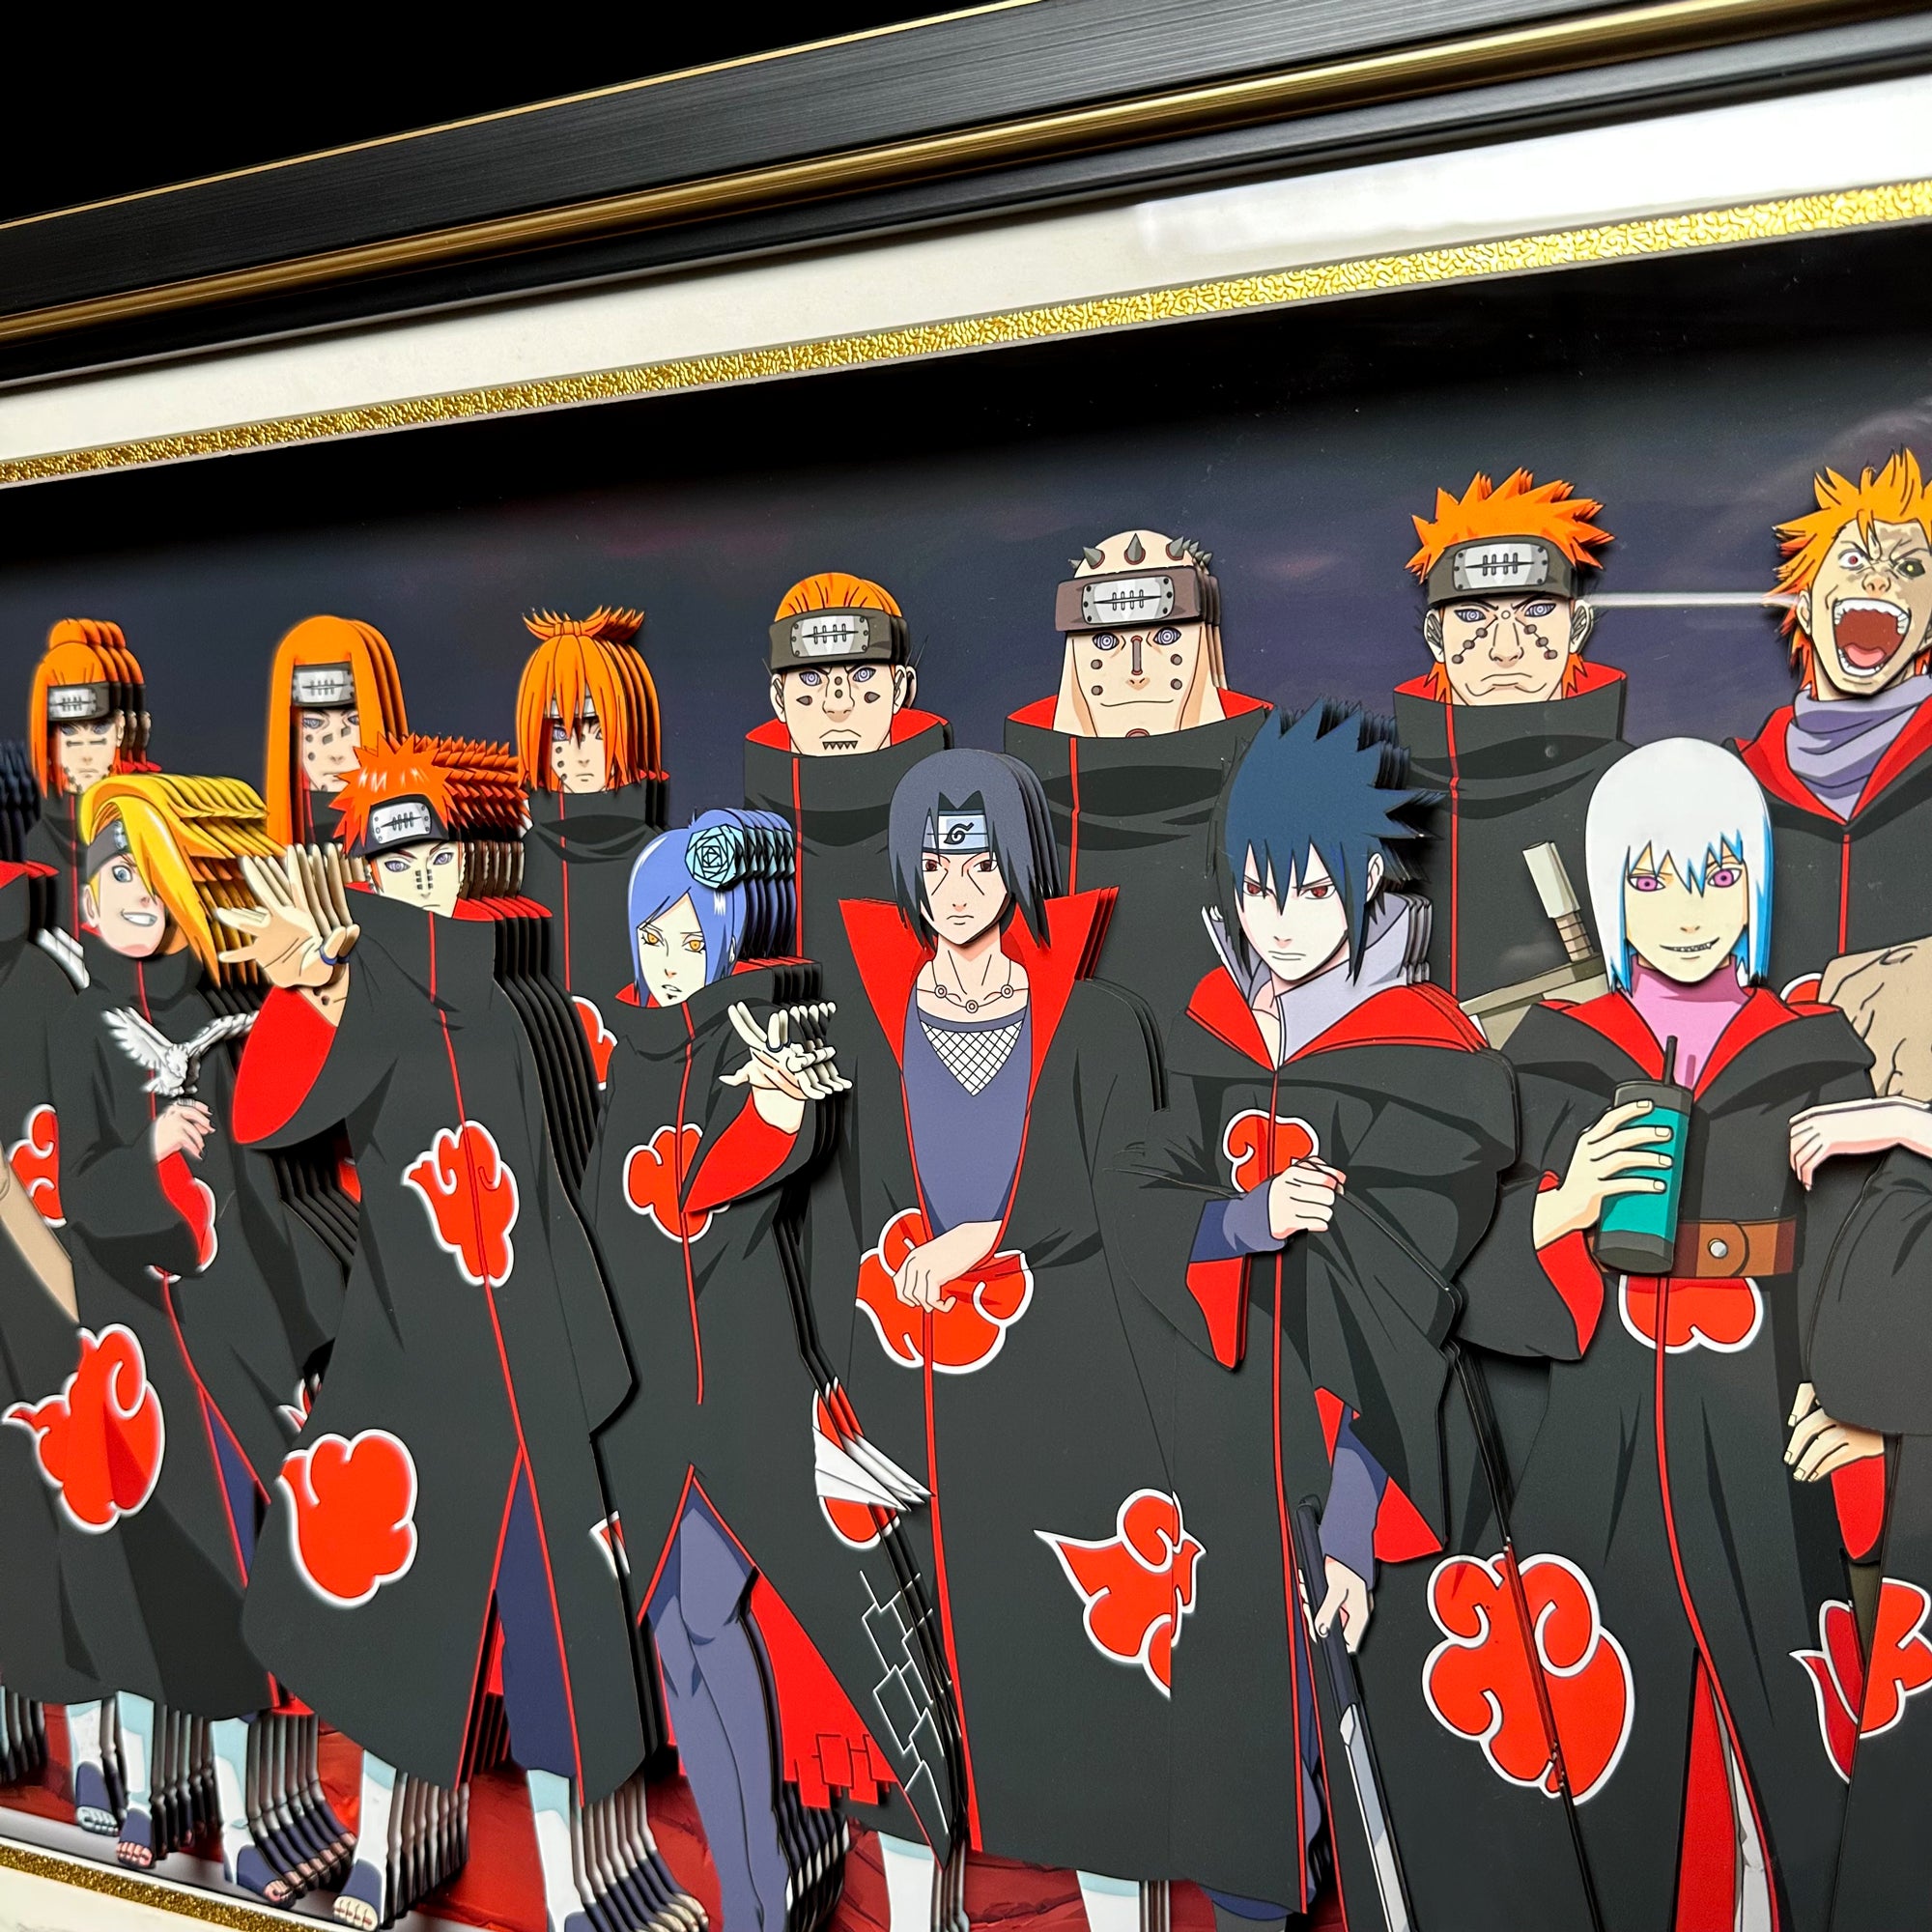 Naruto (Akatsuki) hand-painted 3D home decorative painting